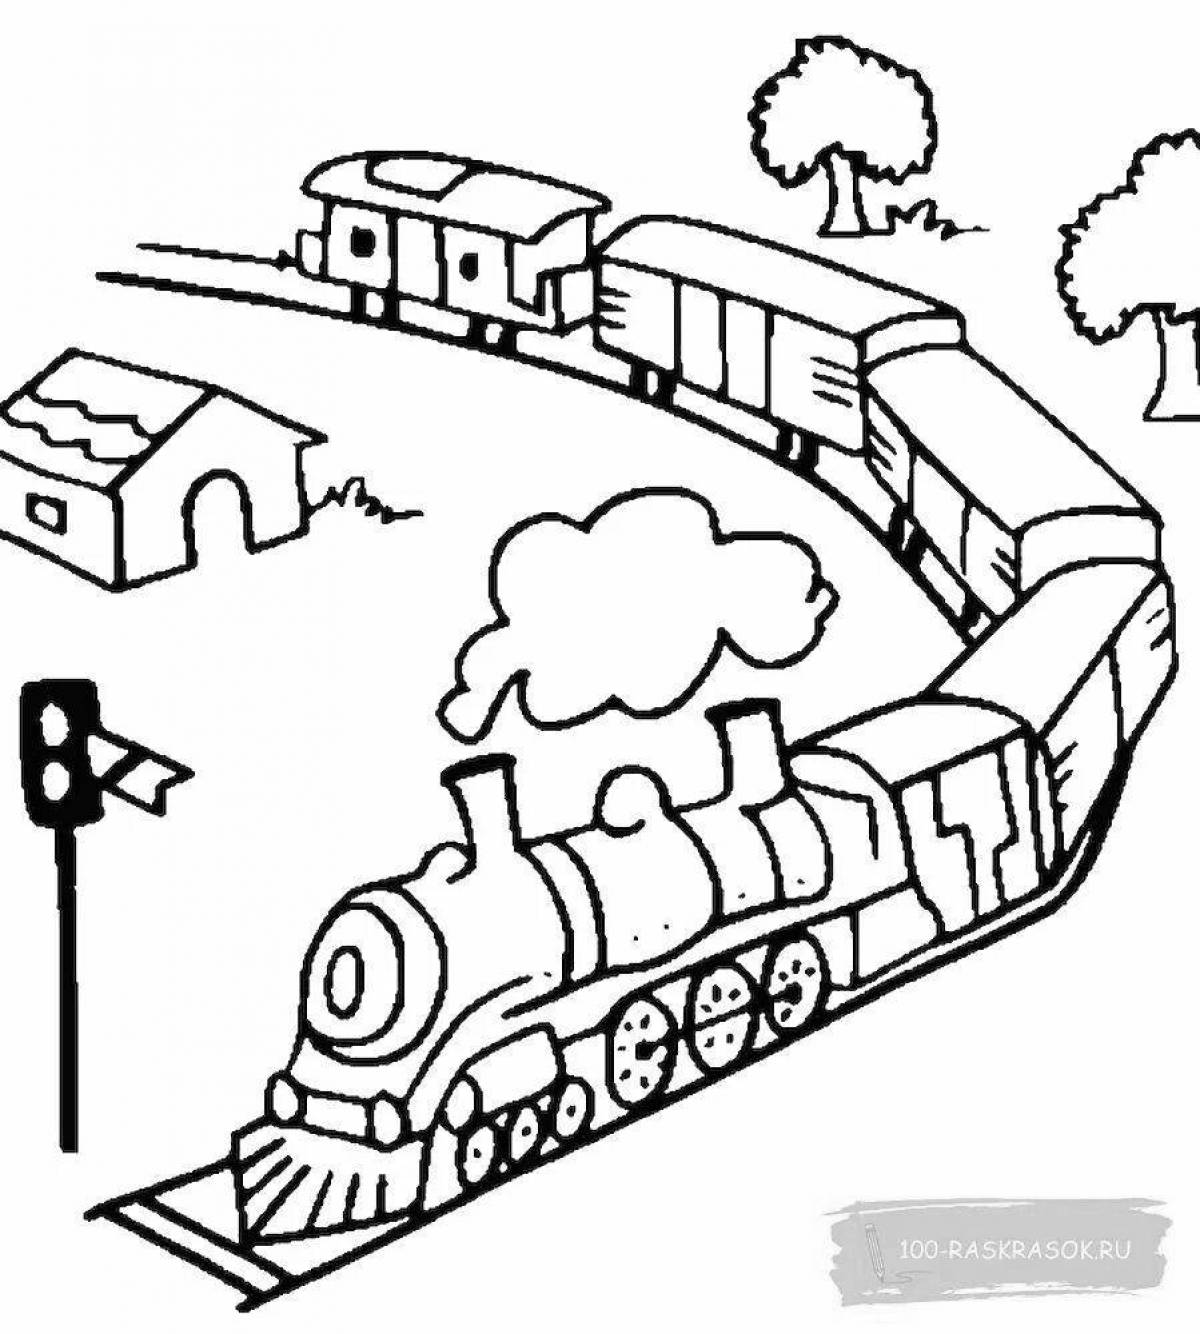 Дорога раскраска для детей. Раскраска поезд. Раскраски. Паровоз. Поезд раскраска для детей. Раскраска железная дорога для детей.